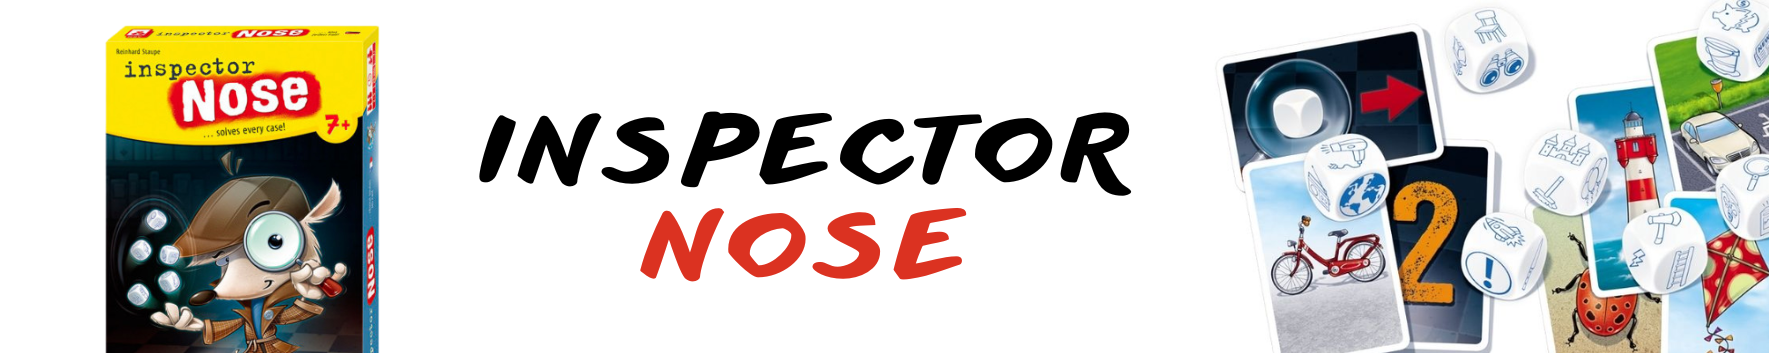 Inspector Nose 